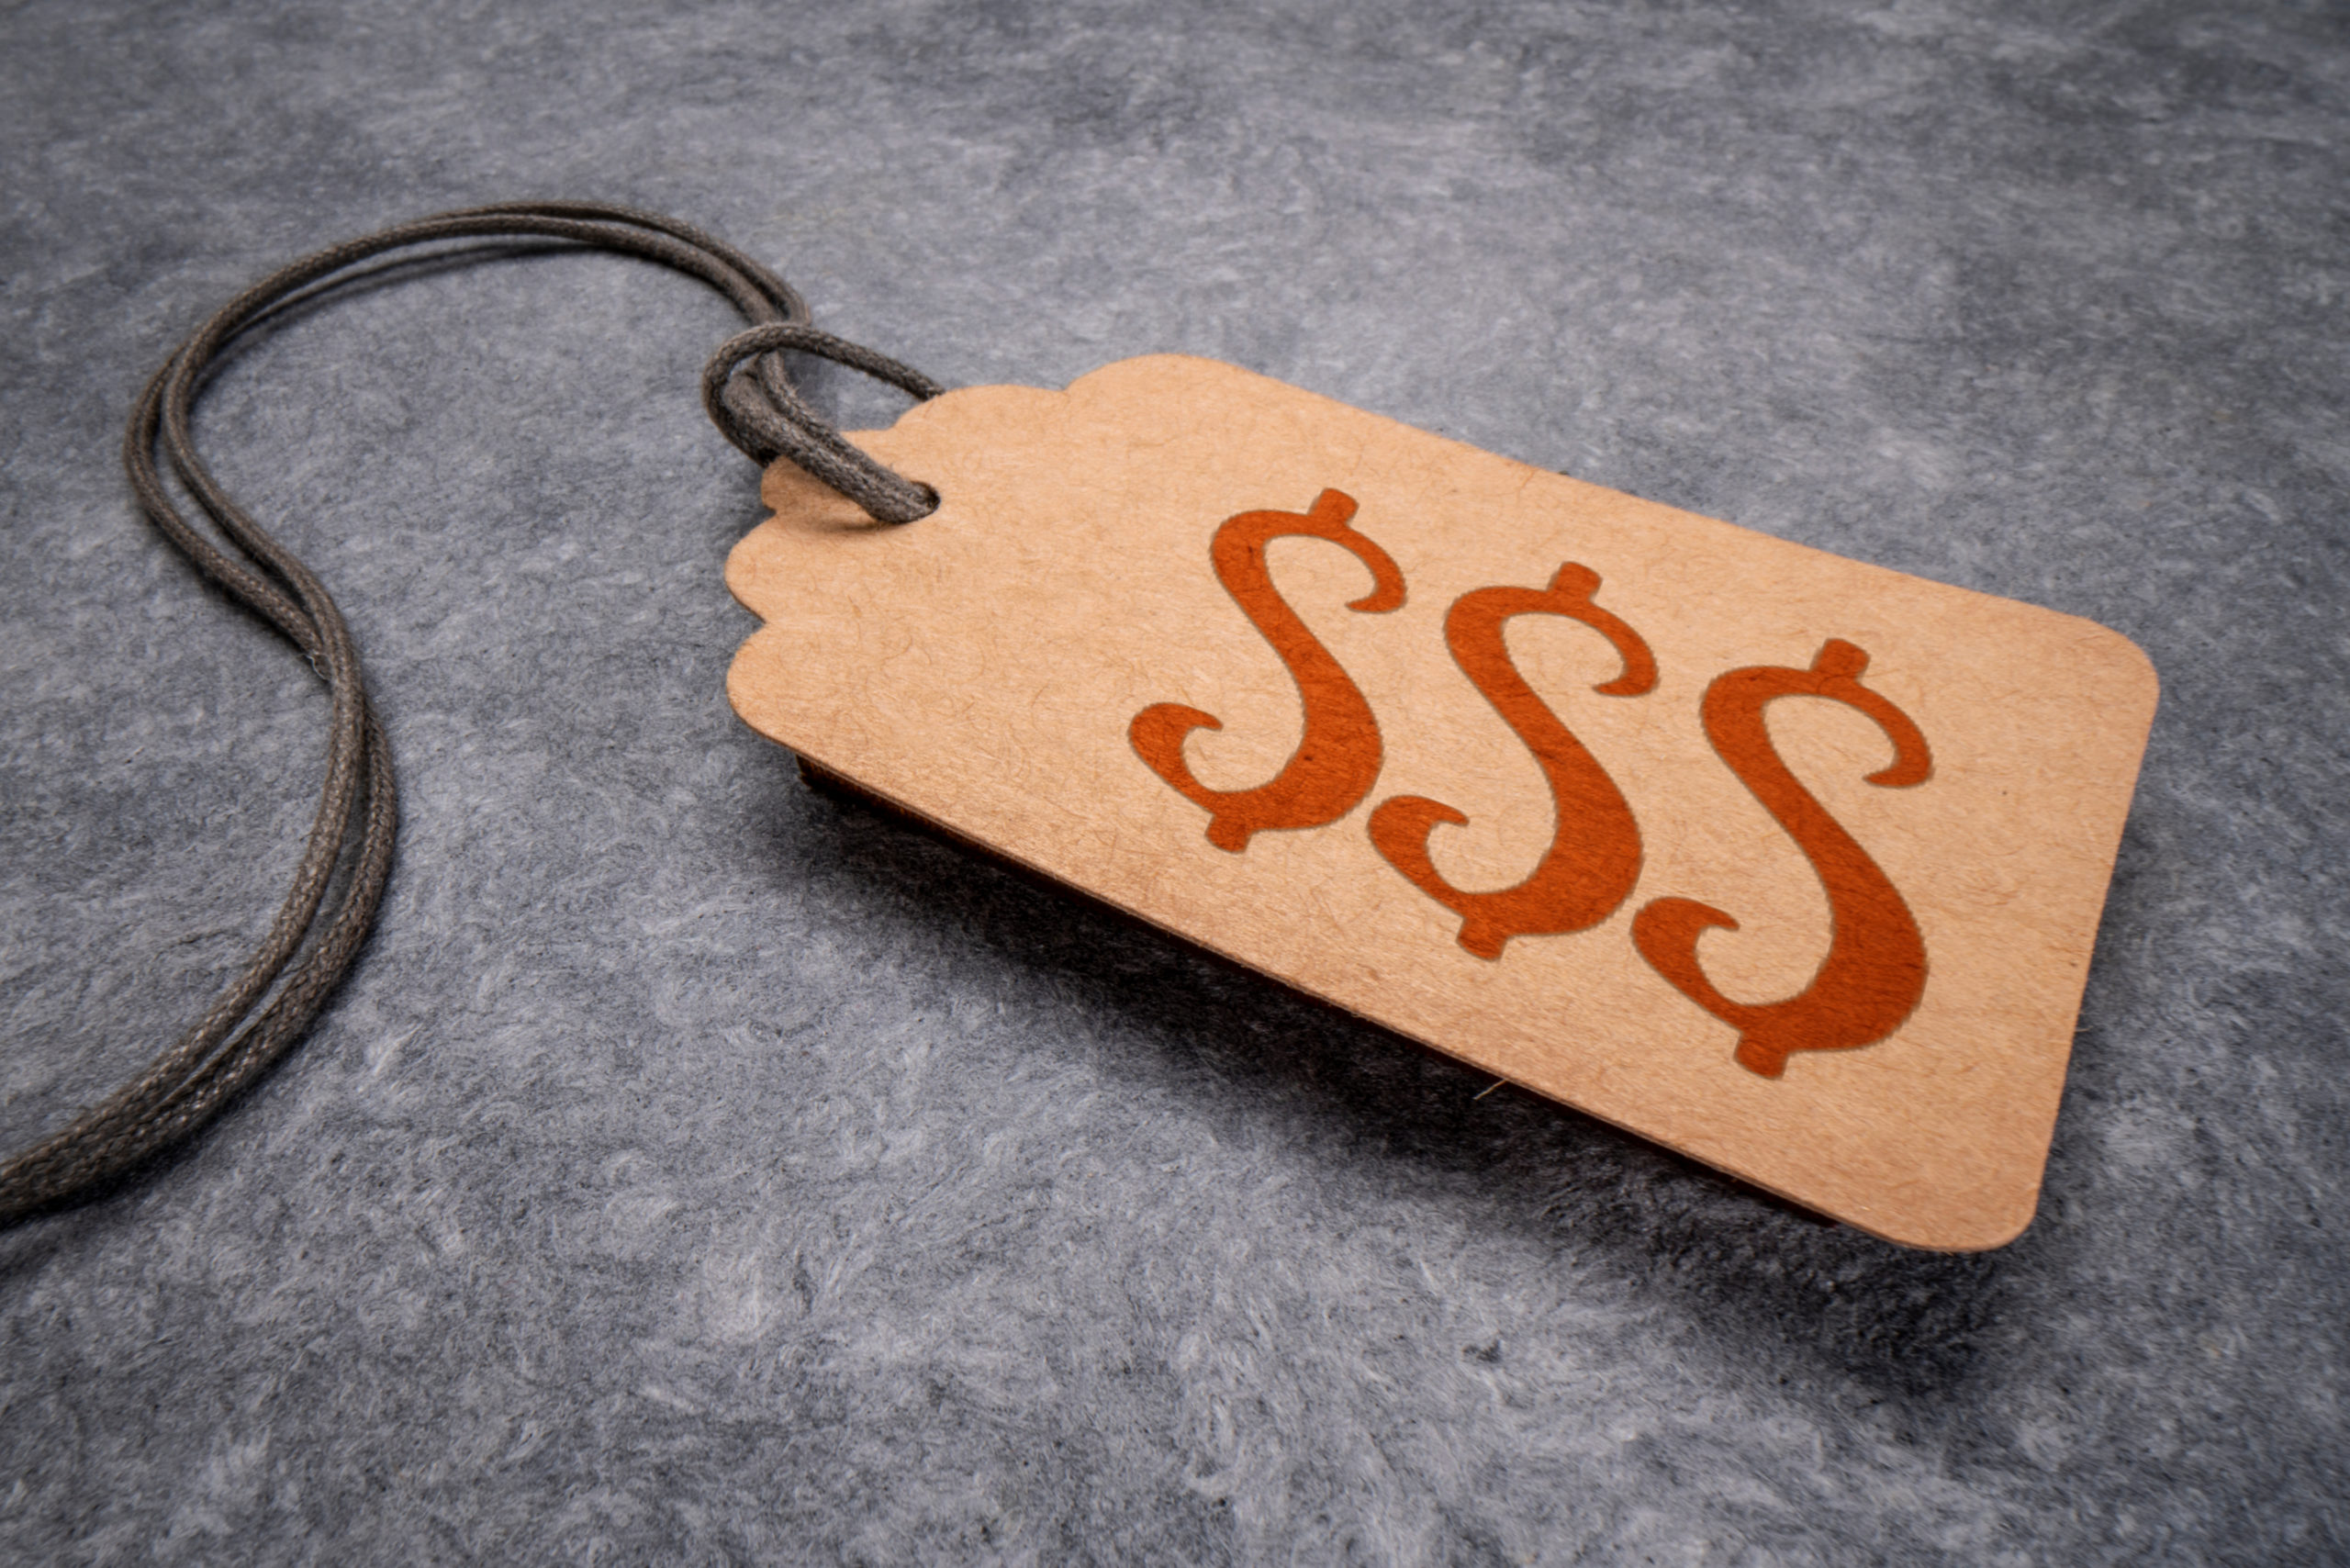 Price tag with money ($$$) symbols on it.